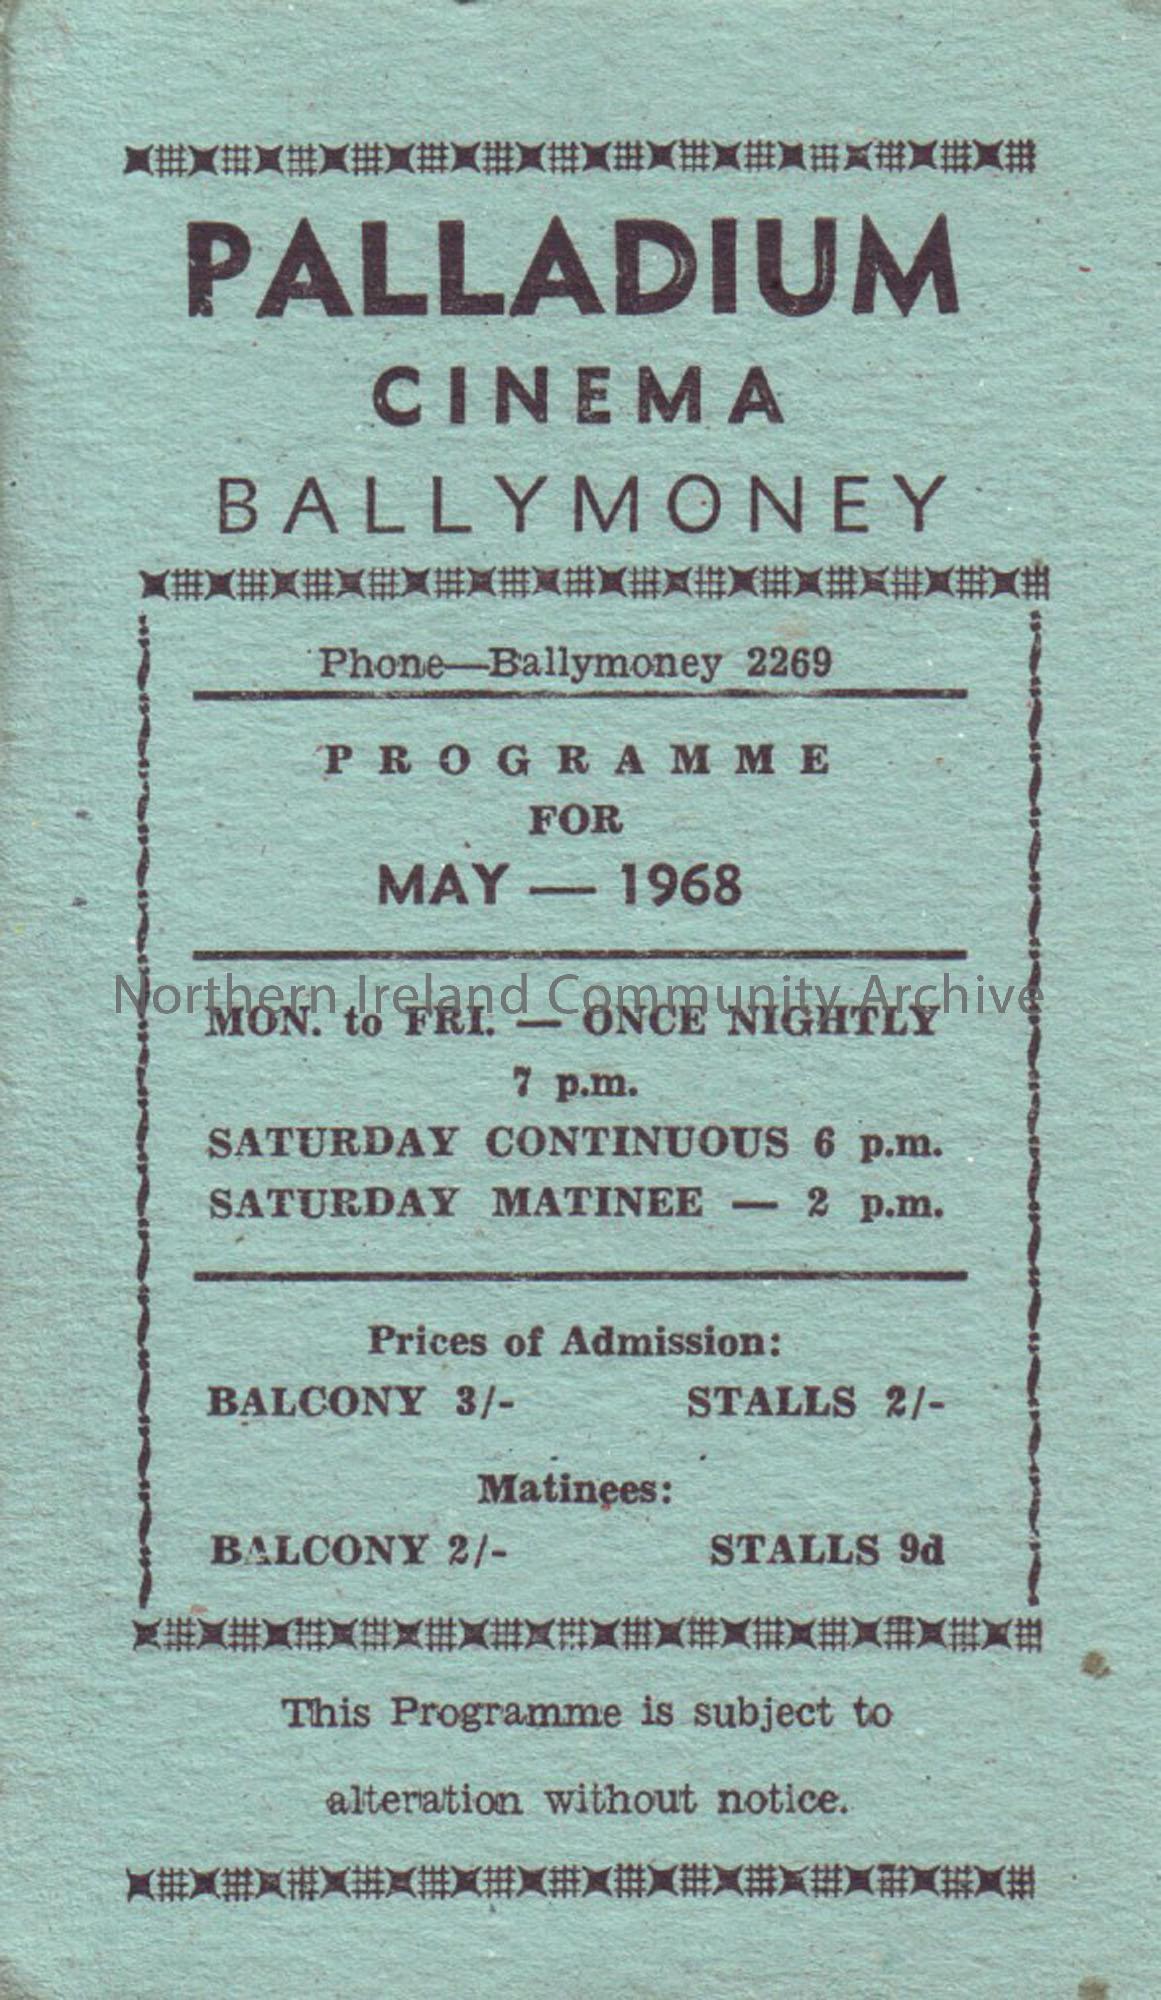 green monthly programme for Ballymoney Palladium cinema- May 1968